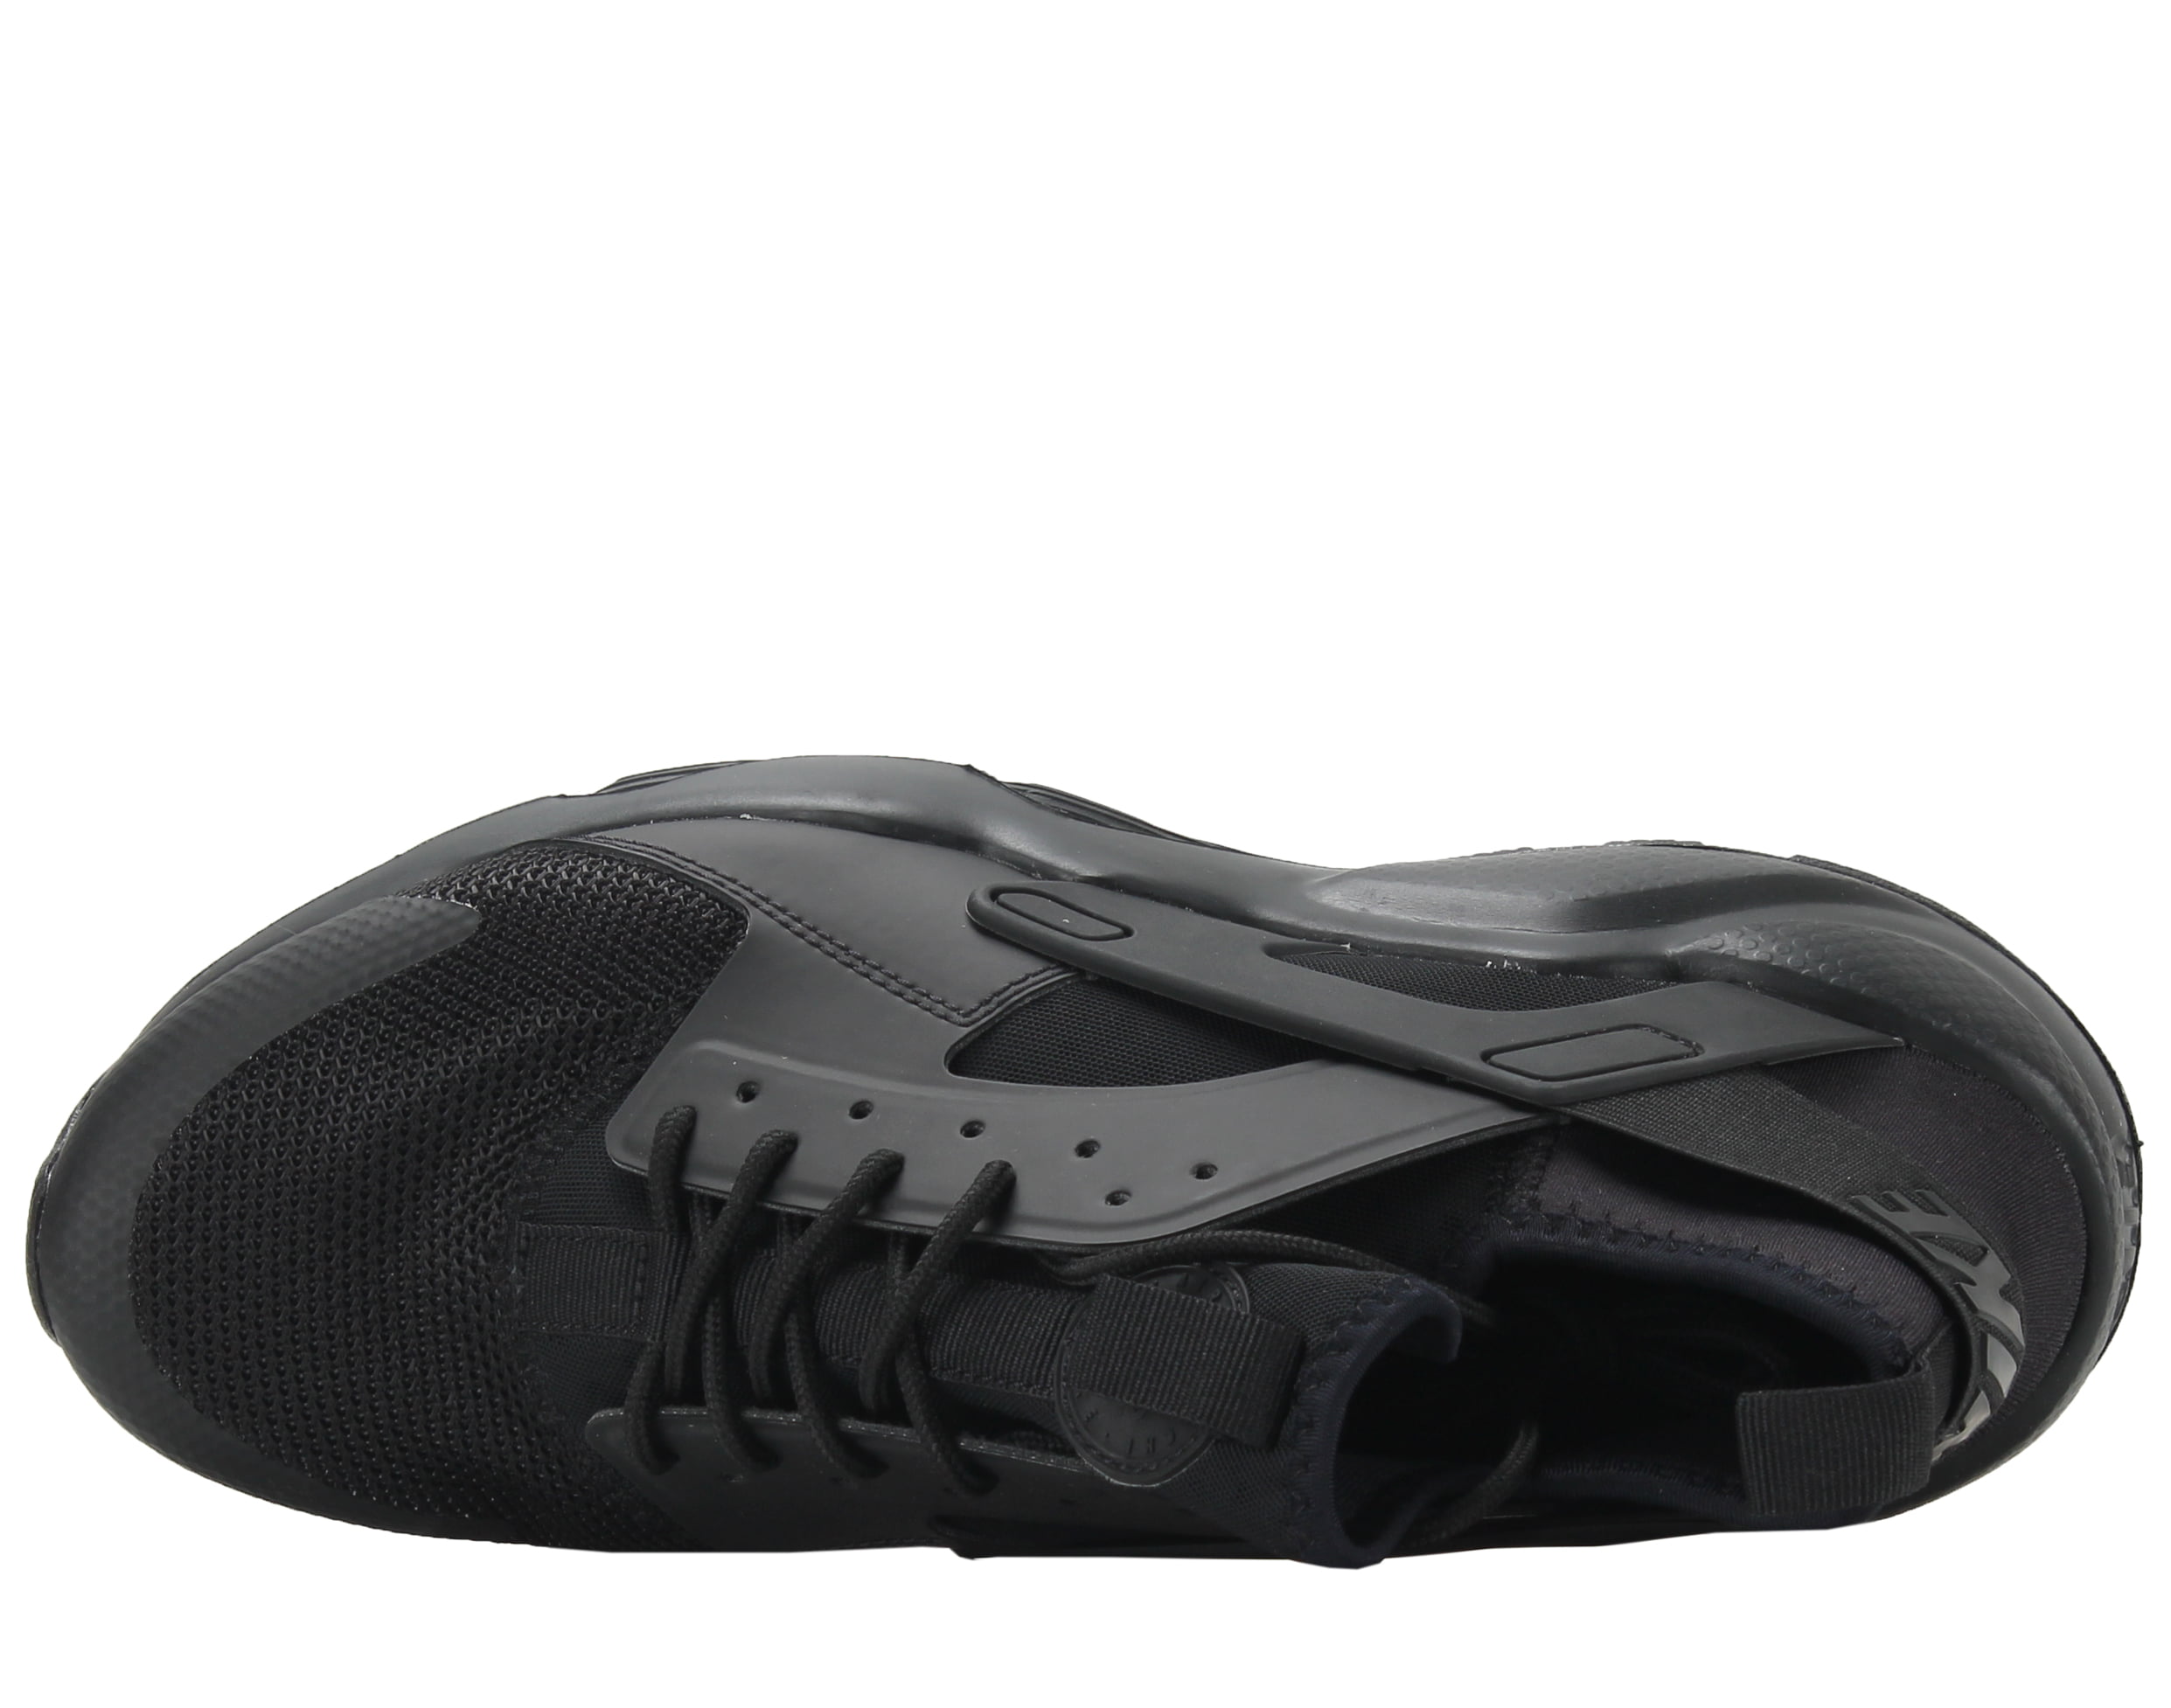 Men's shoes Nike Air Huarache Run Ultra Black/ Black-Black